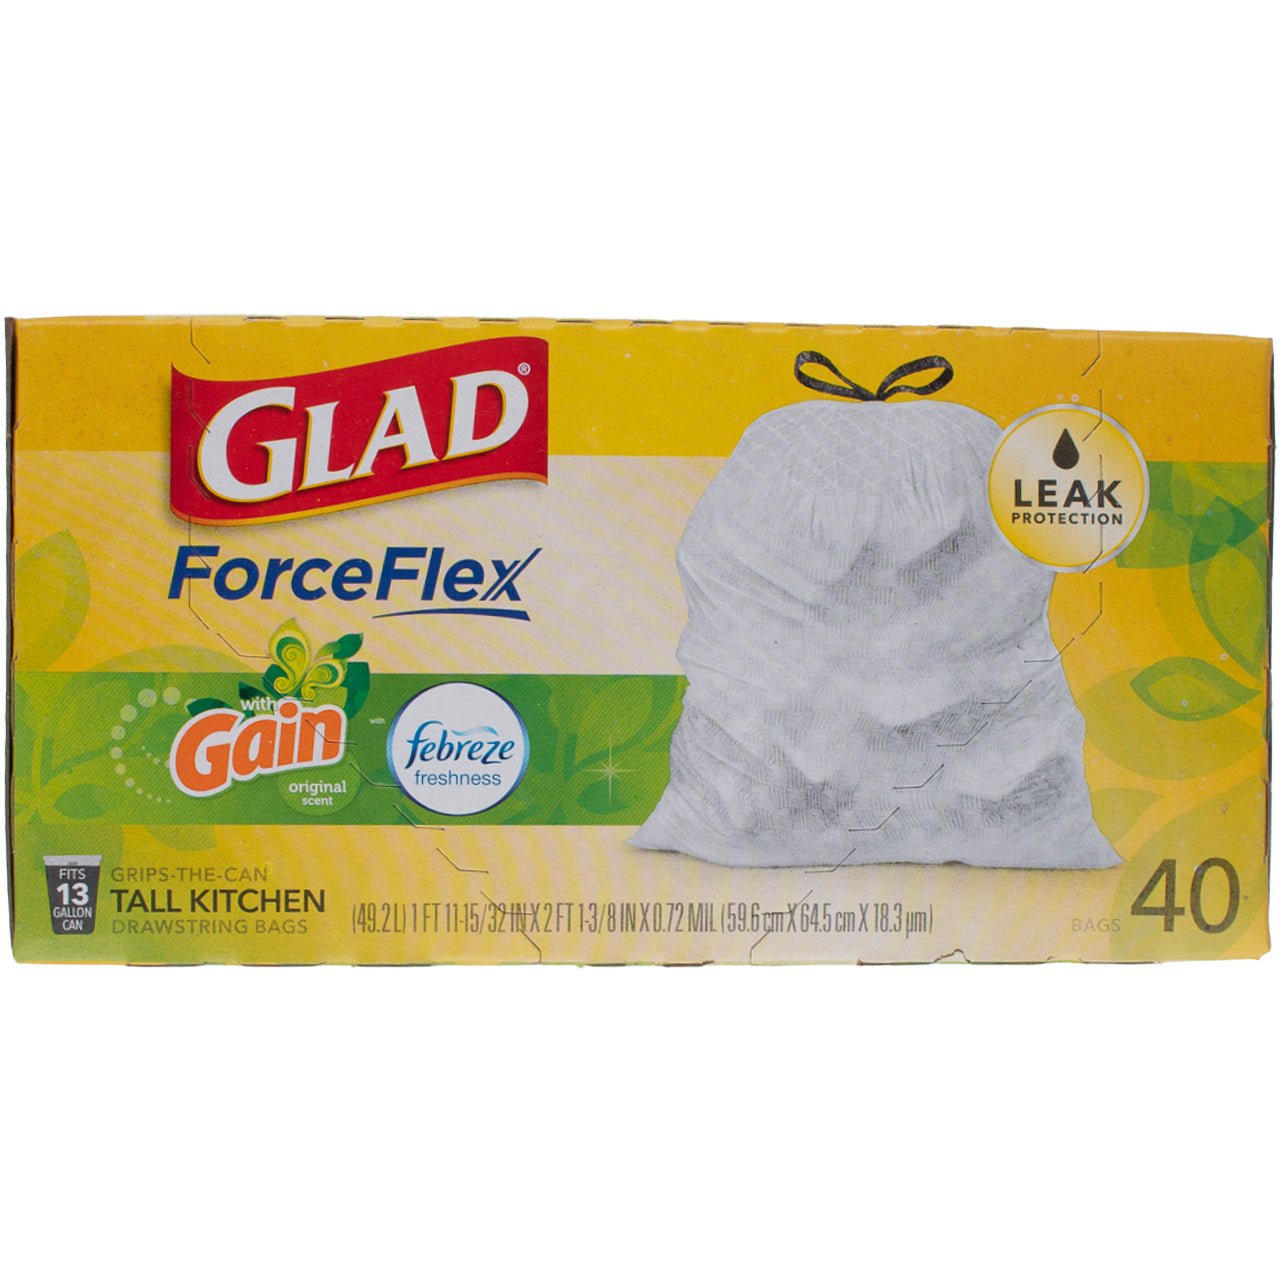 Glad ForceFlex Tall Kitchen Trash Bags, 13 Gallon, 40 Bags (Gain Original  Scent)